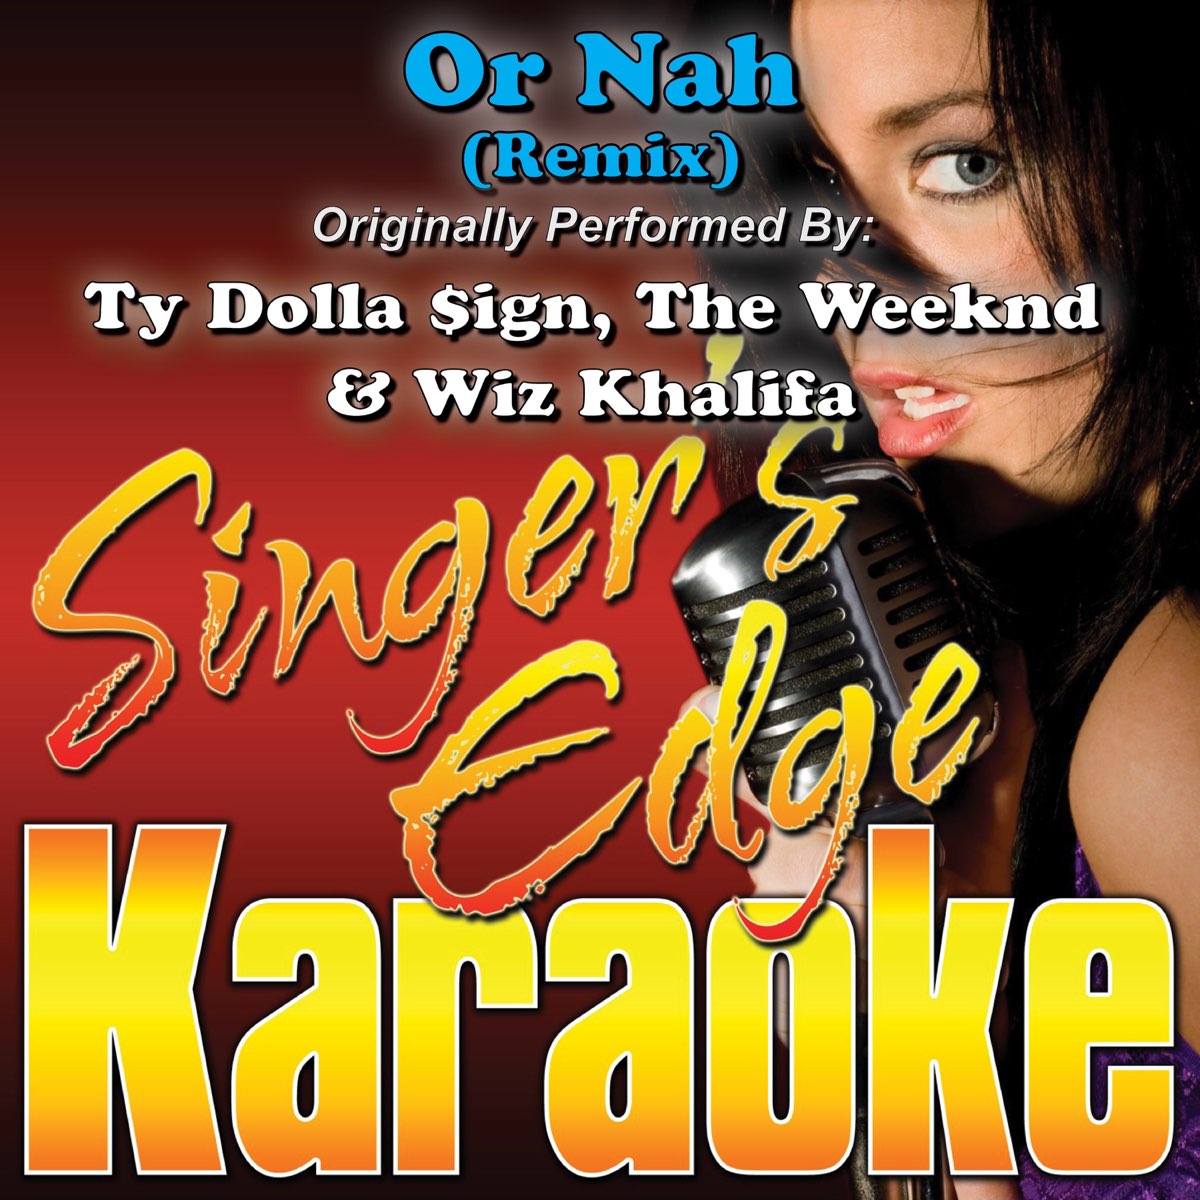 Or Nah (Remix) [Originally Performed By Ty Dolla $ign, The Weeknd & Wiz  Khalifa] [Karaoke Version] - Single by Singer's Edge Karaoke on Apple Music